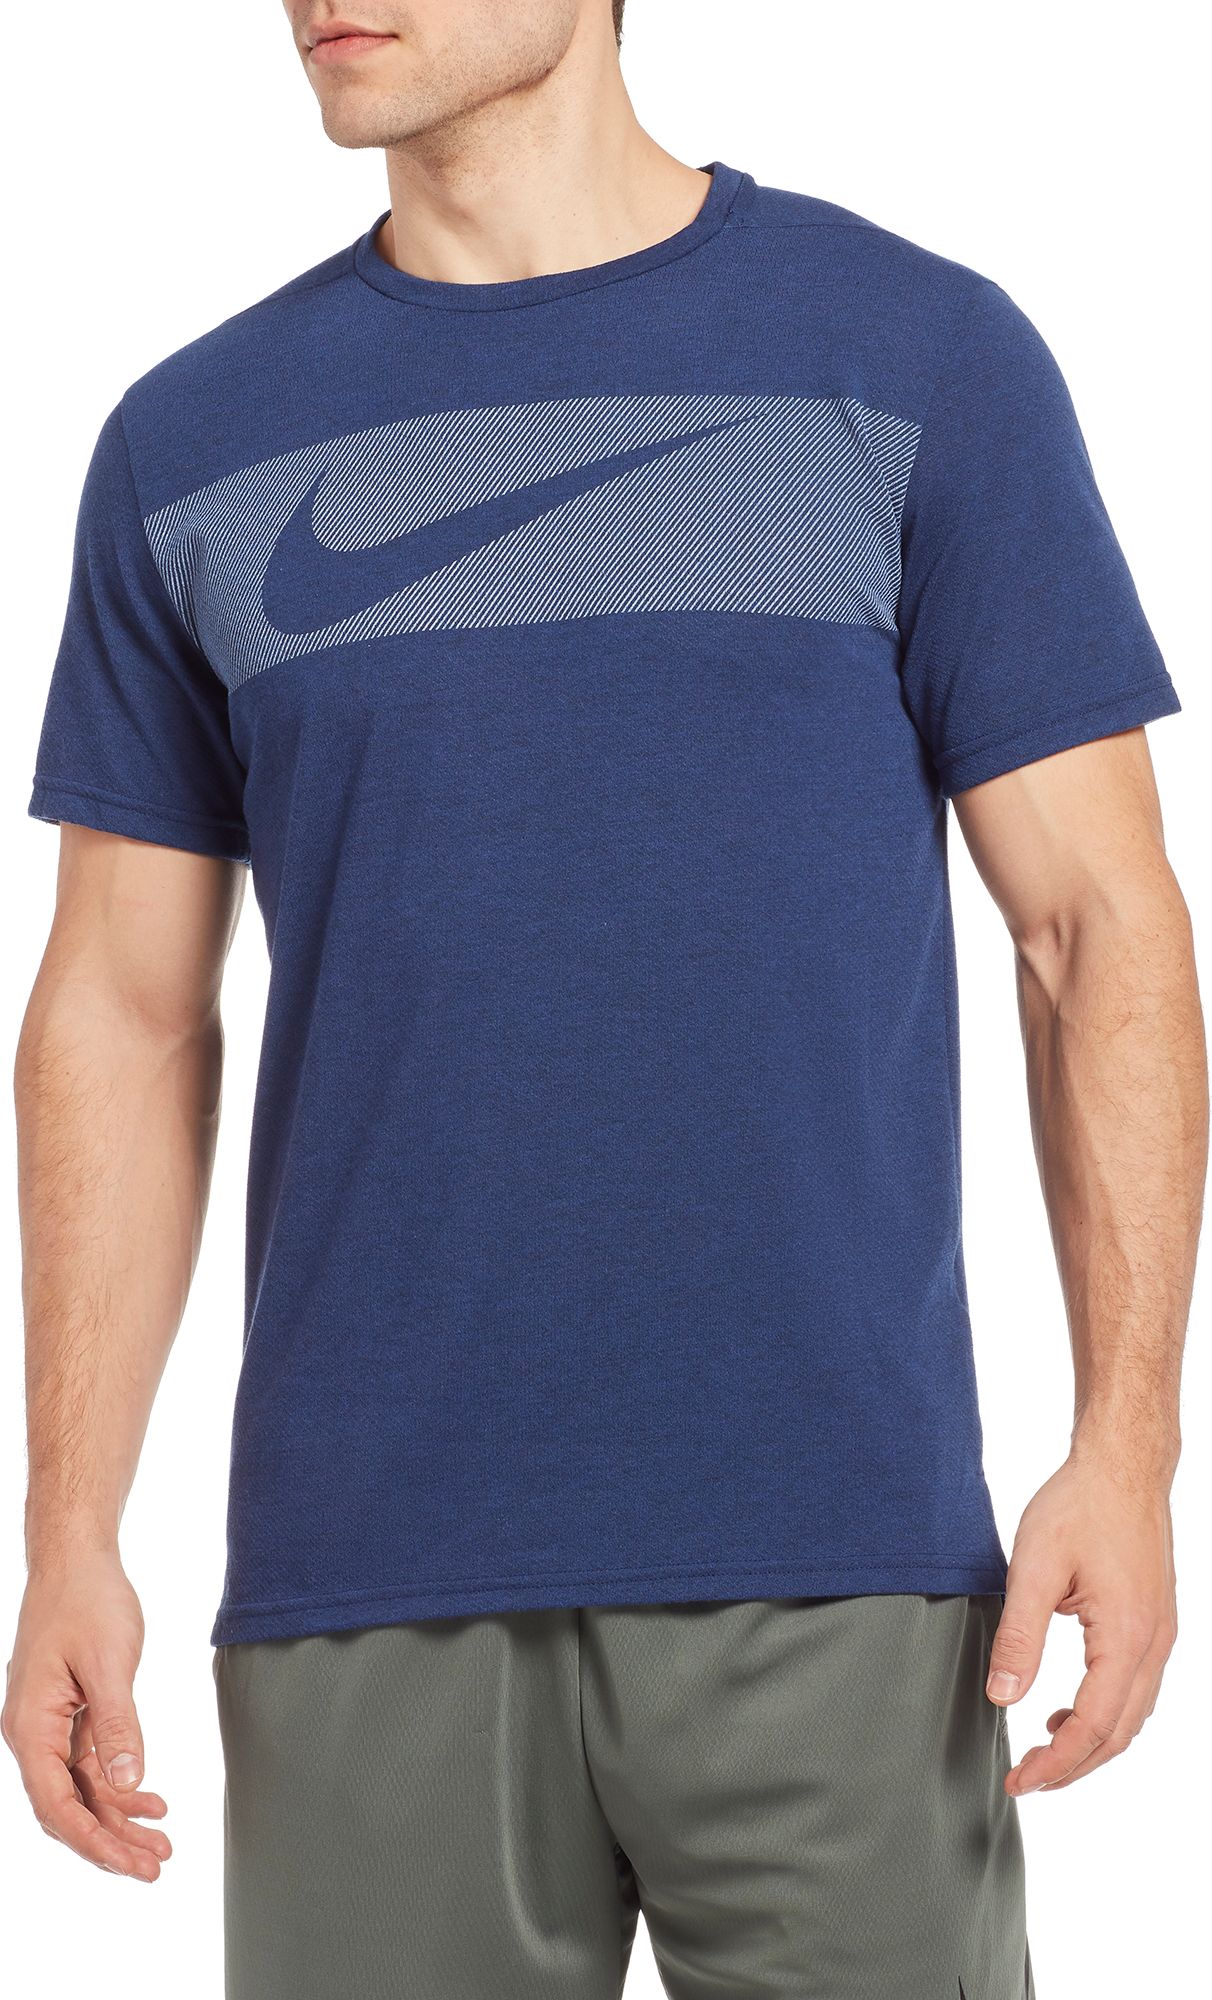 Nike Men's Hyper Dry Graphic Tee - .97 - .97